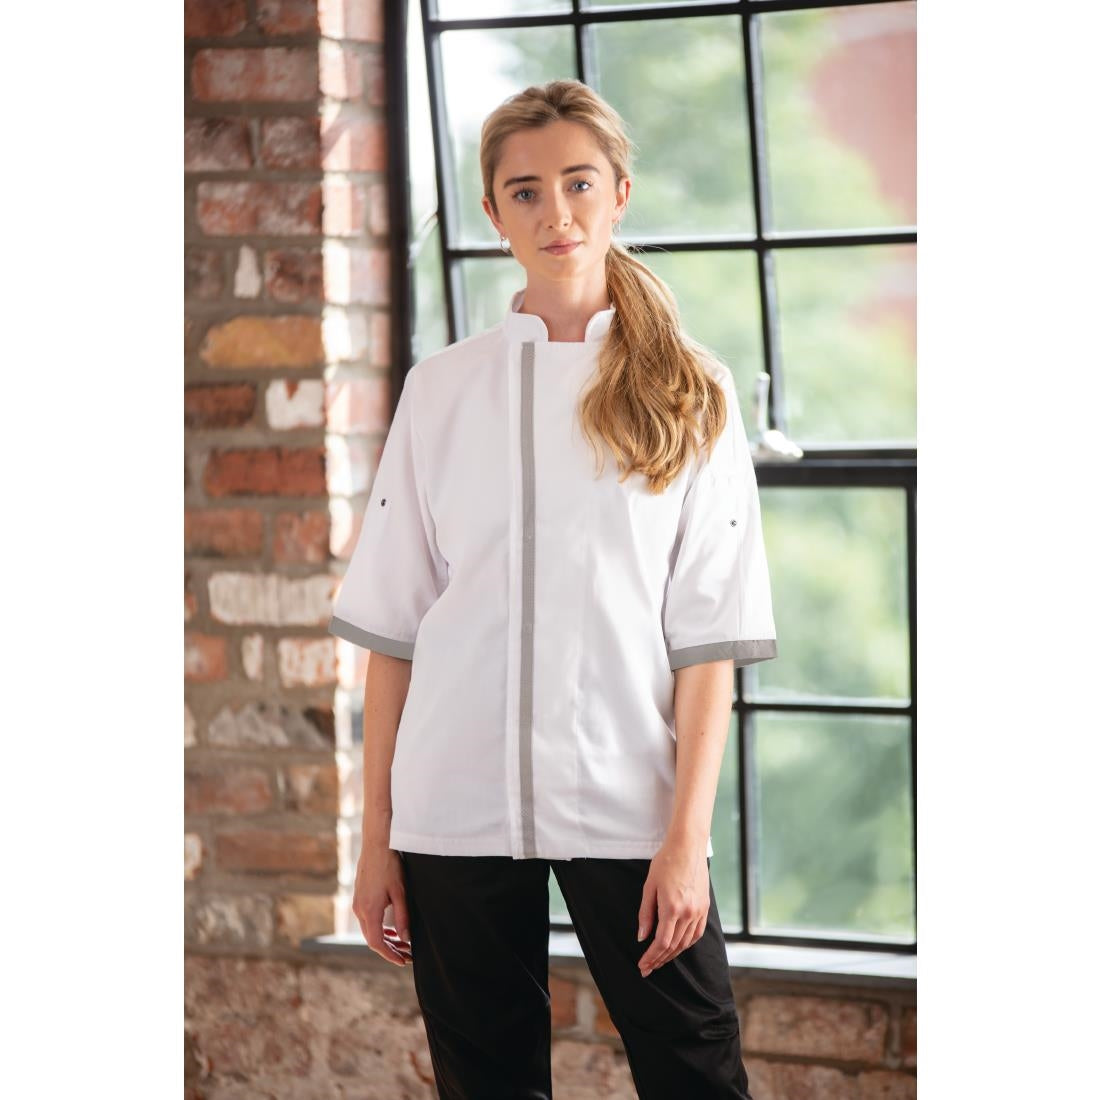 B998-S Southside Unisex Chefs Jacket Short Sleeve White S JD Catering Equipment Solutions Ltd